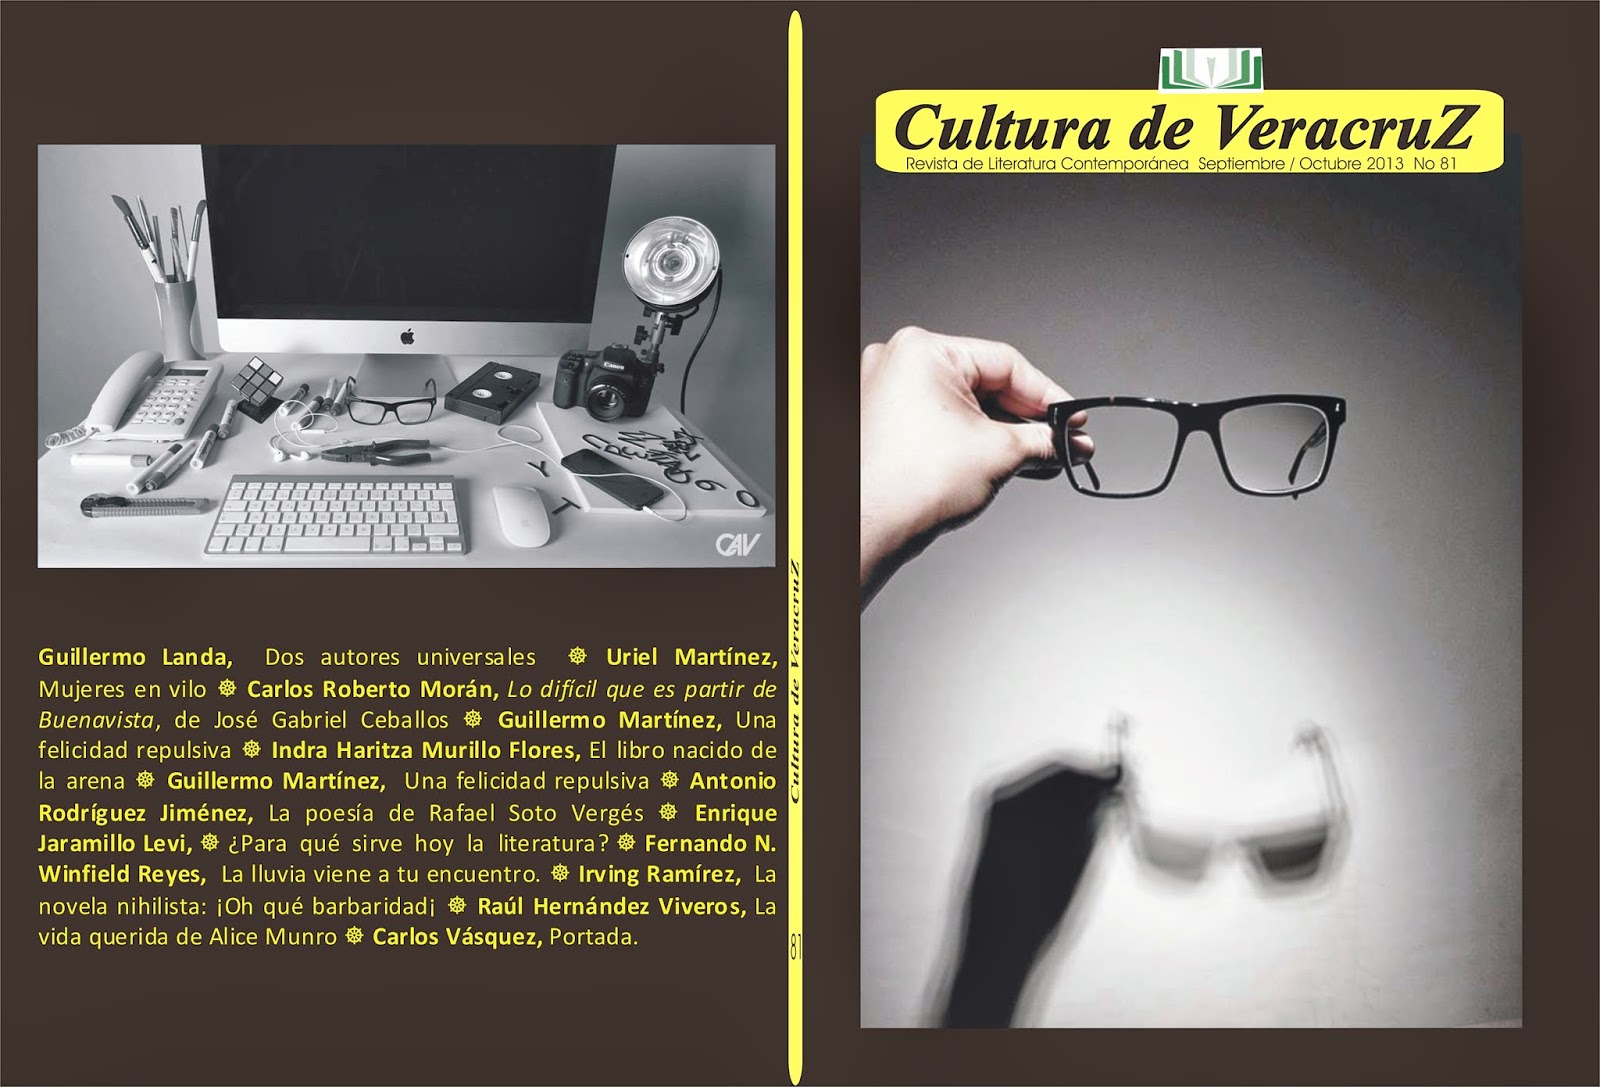  REVISTA Cultura de VeracruZ 81, Da click en la portada para descargar